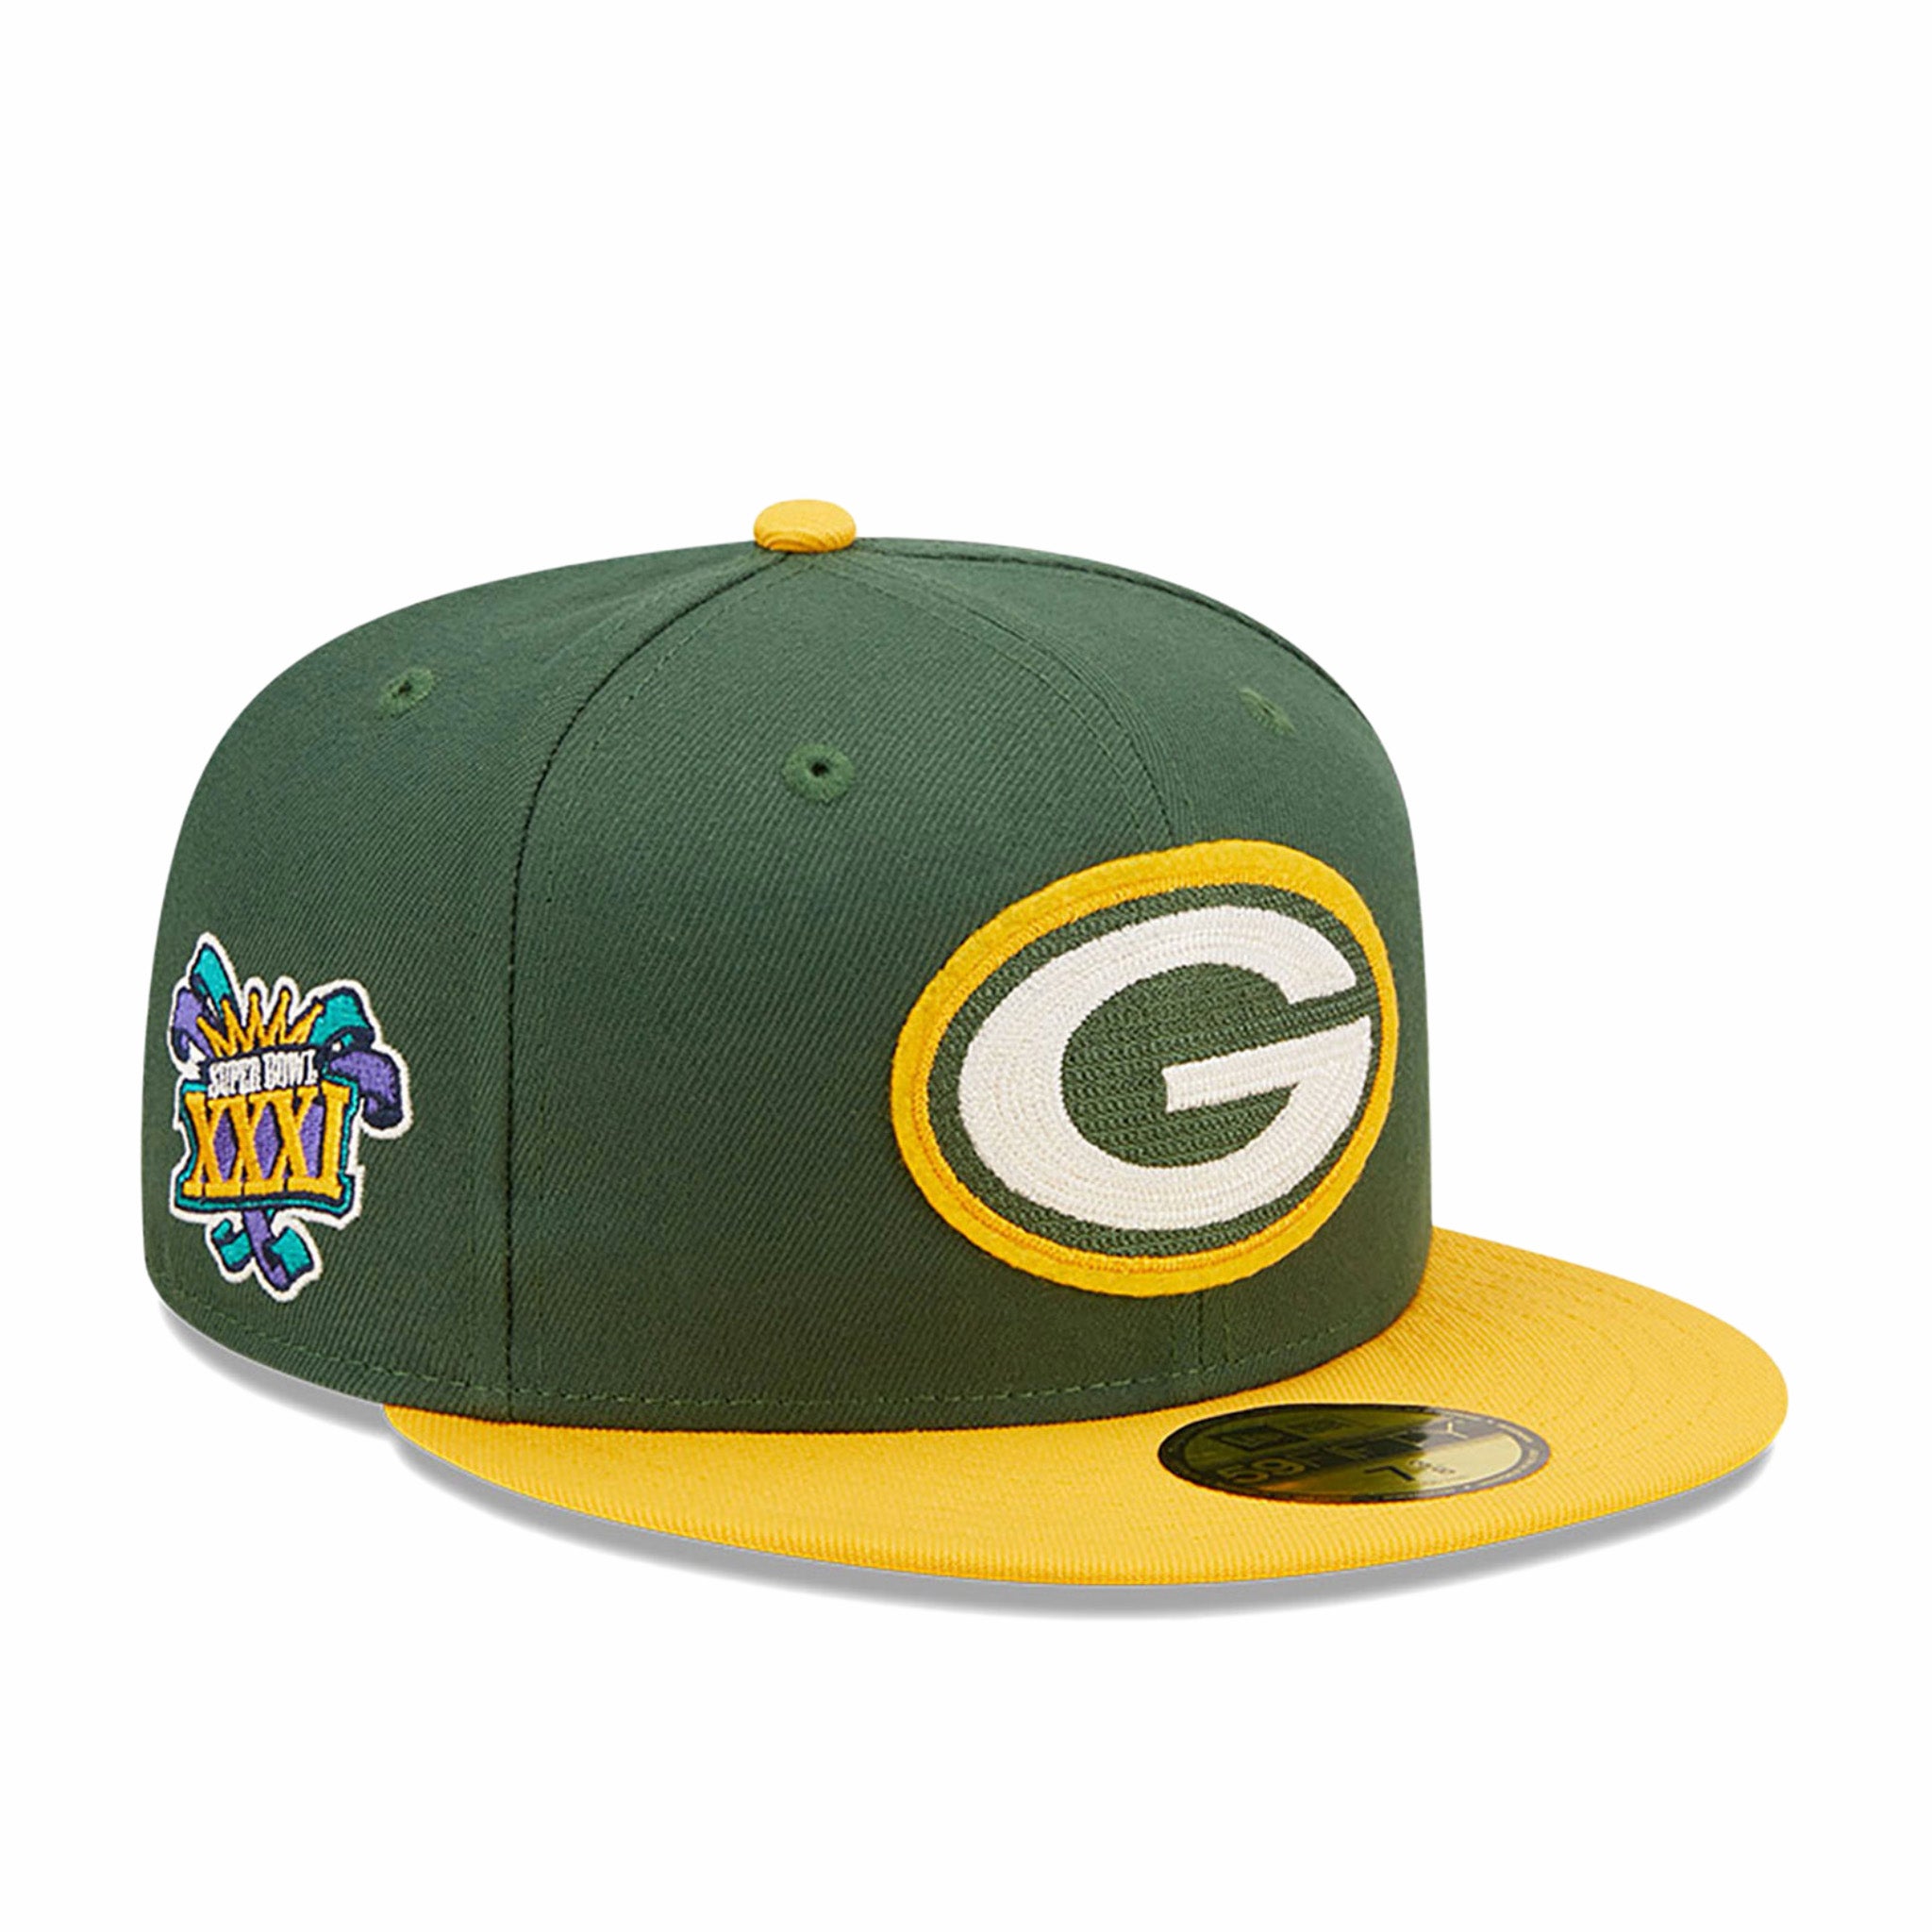 Nuova Era, New Era Green Bay Packers "Letterman" 59FIFTY (verde)